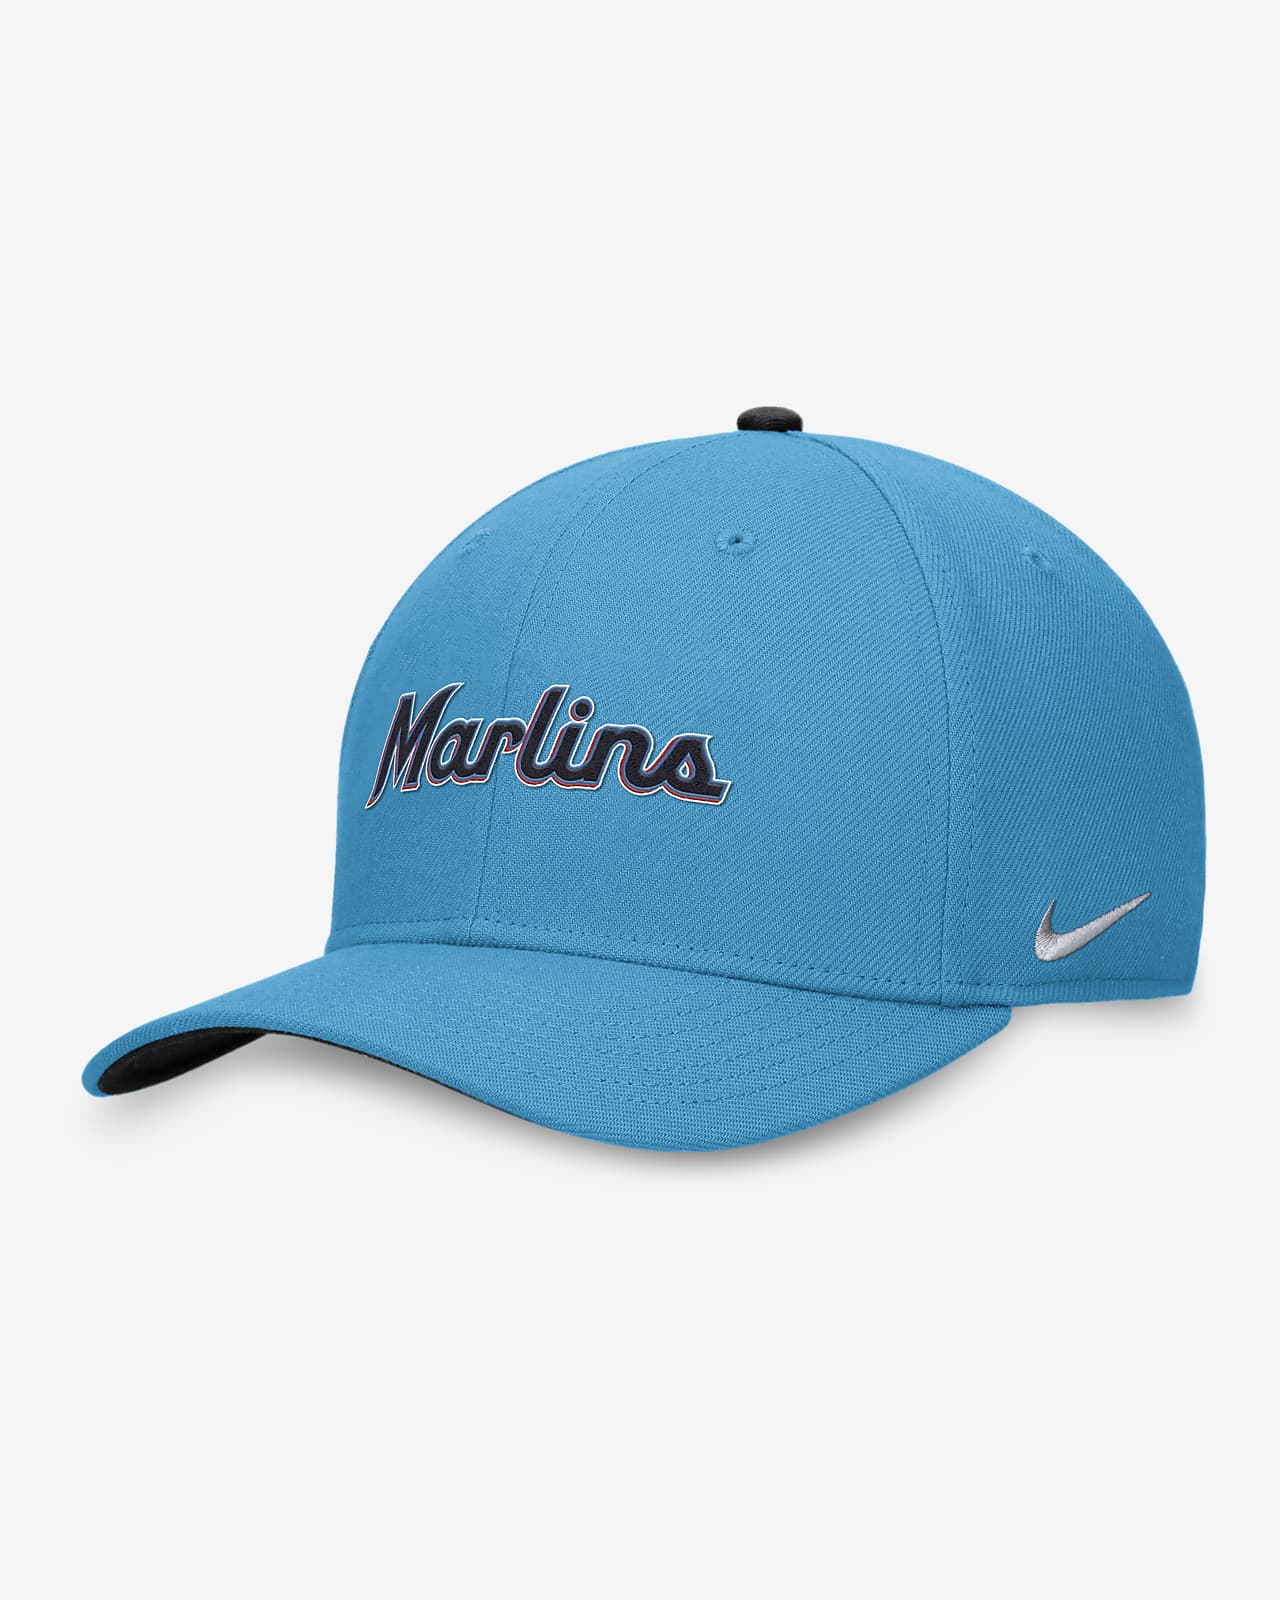 marlins baseball hats